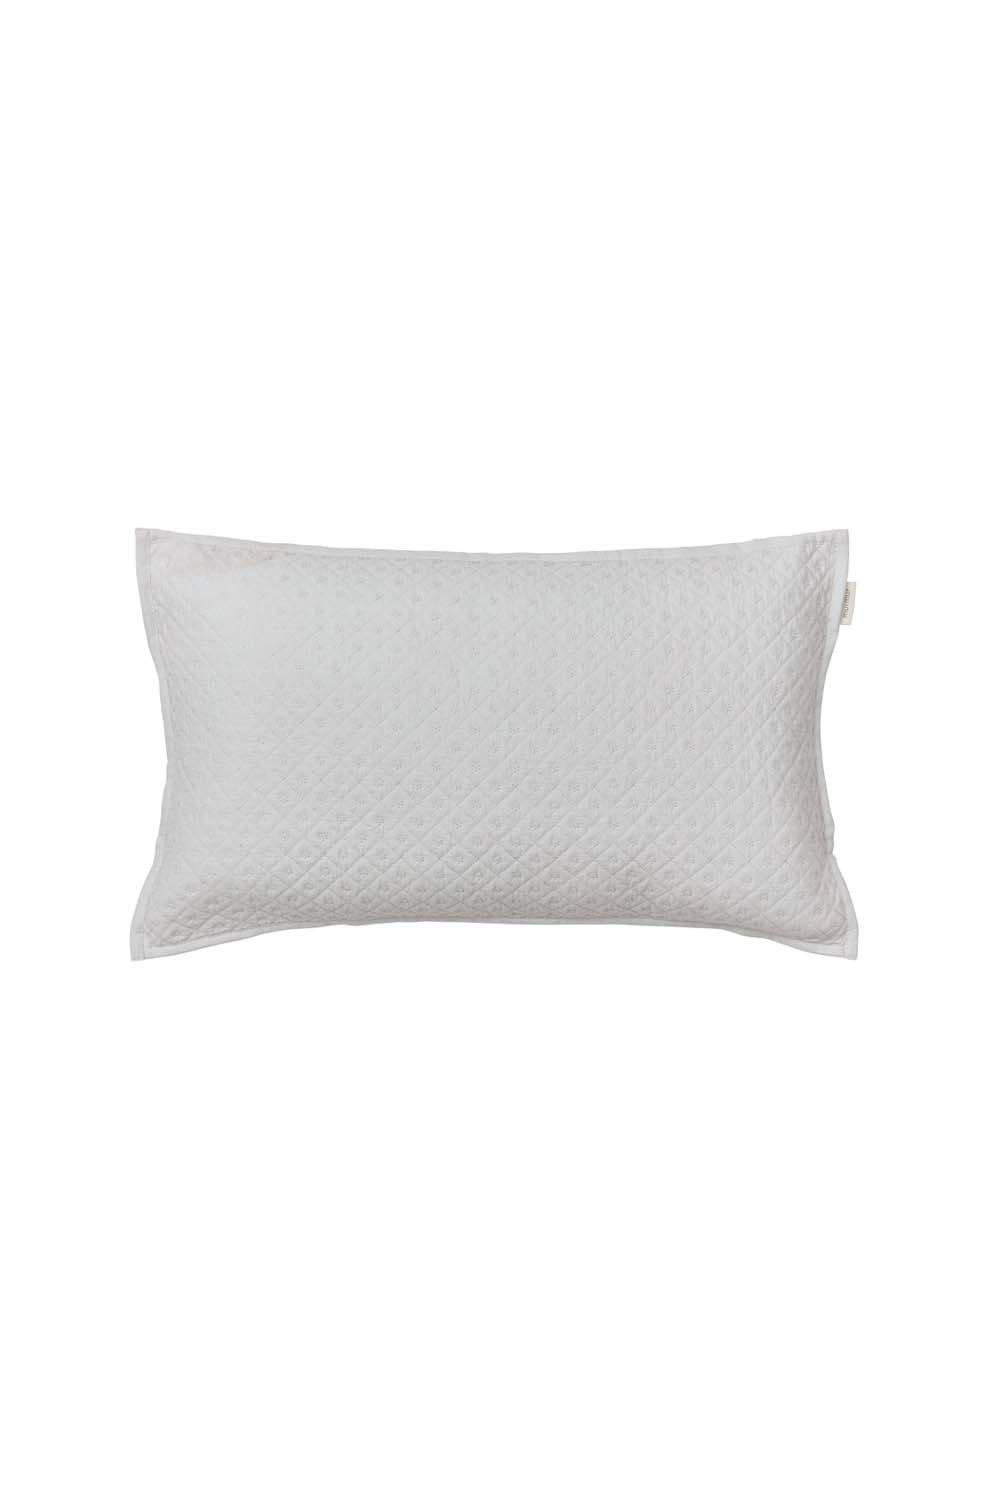 'Cynthia' Cotton Cushion 50X30Cm